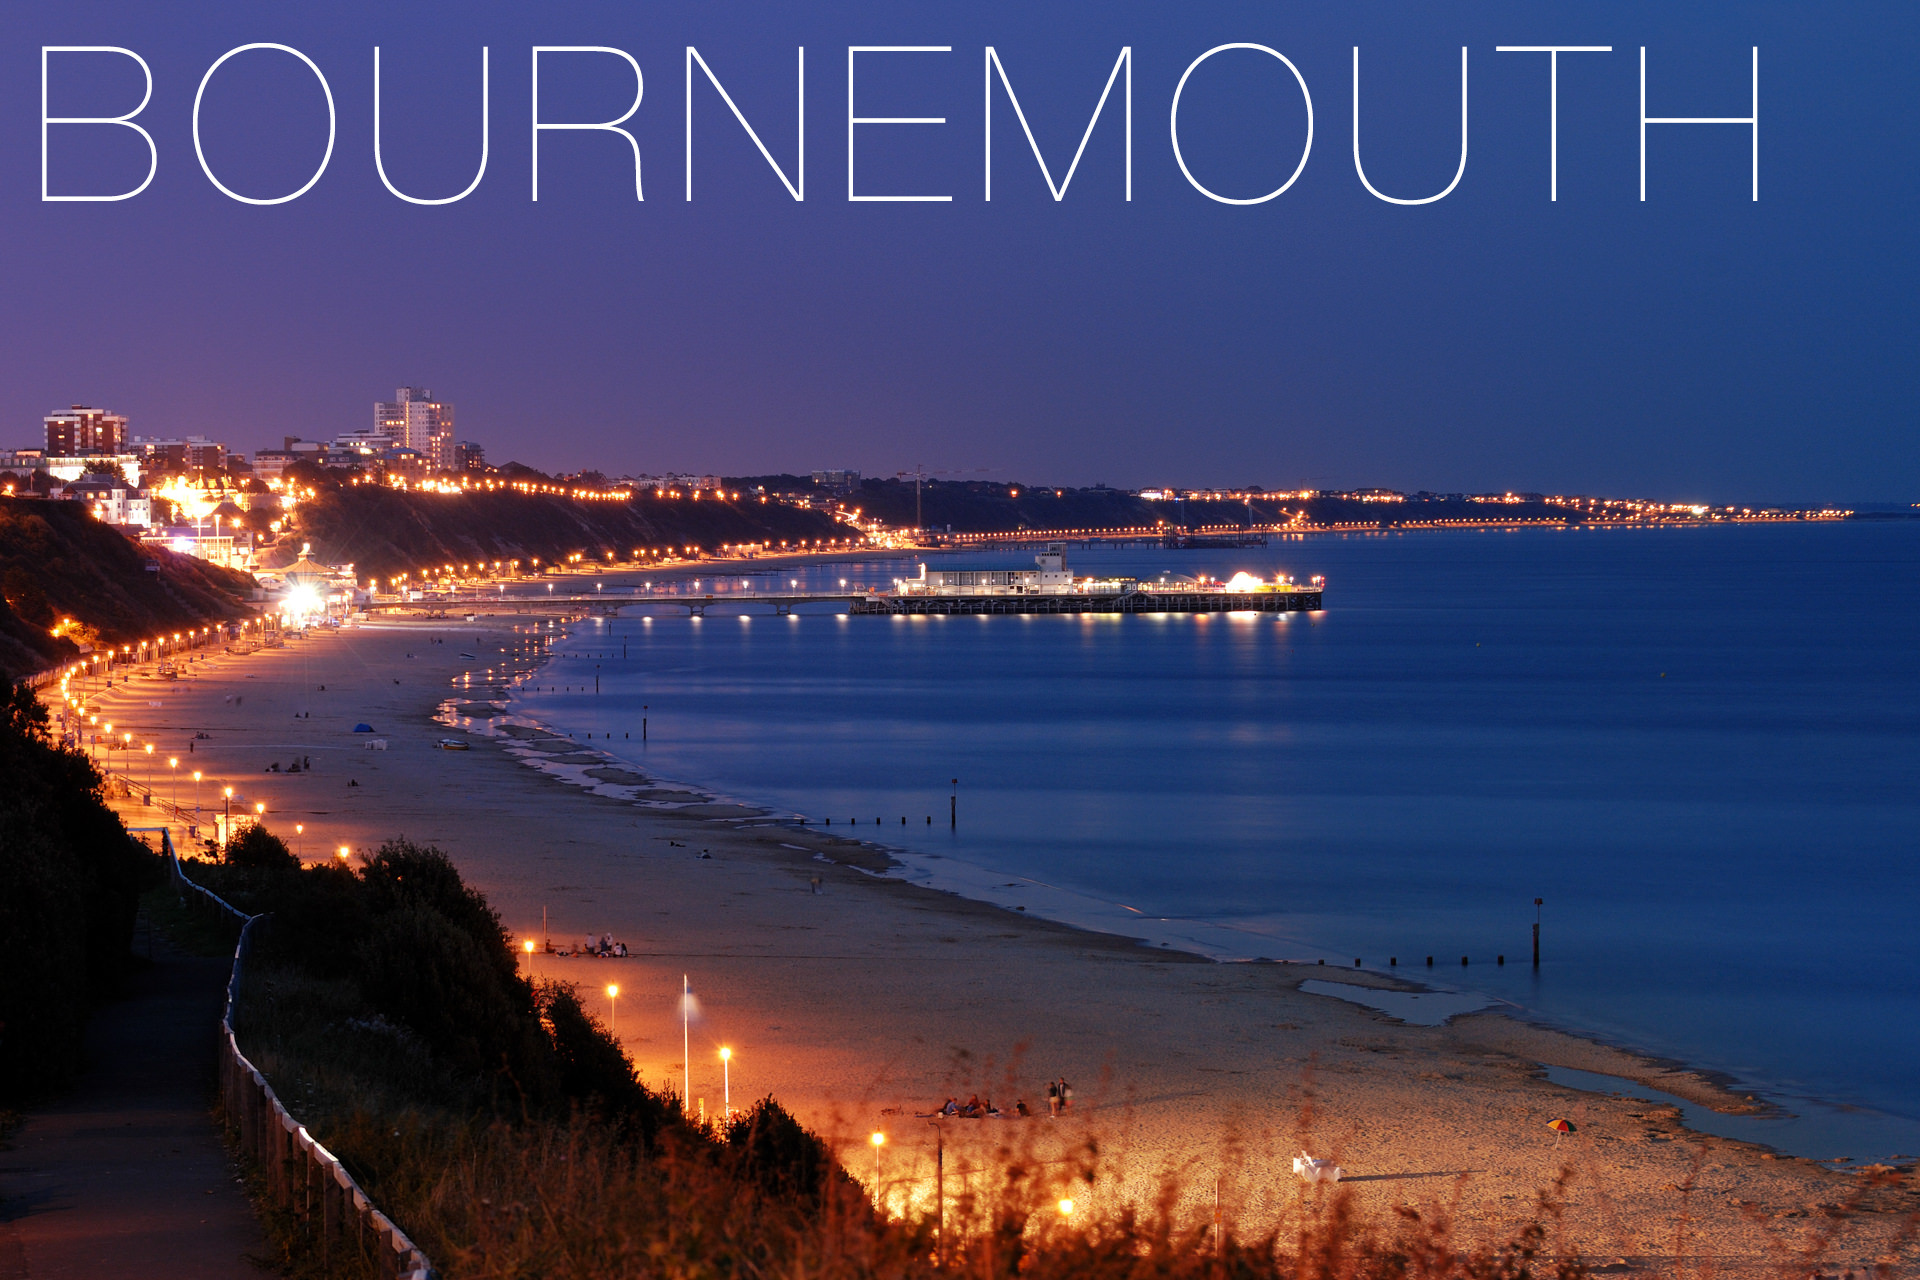 Bournemouth